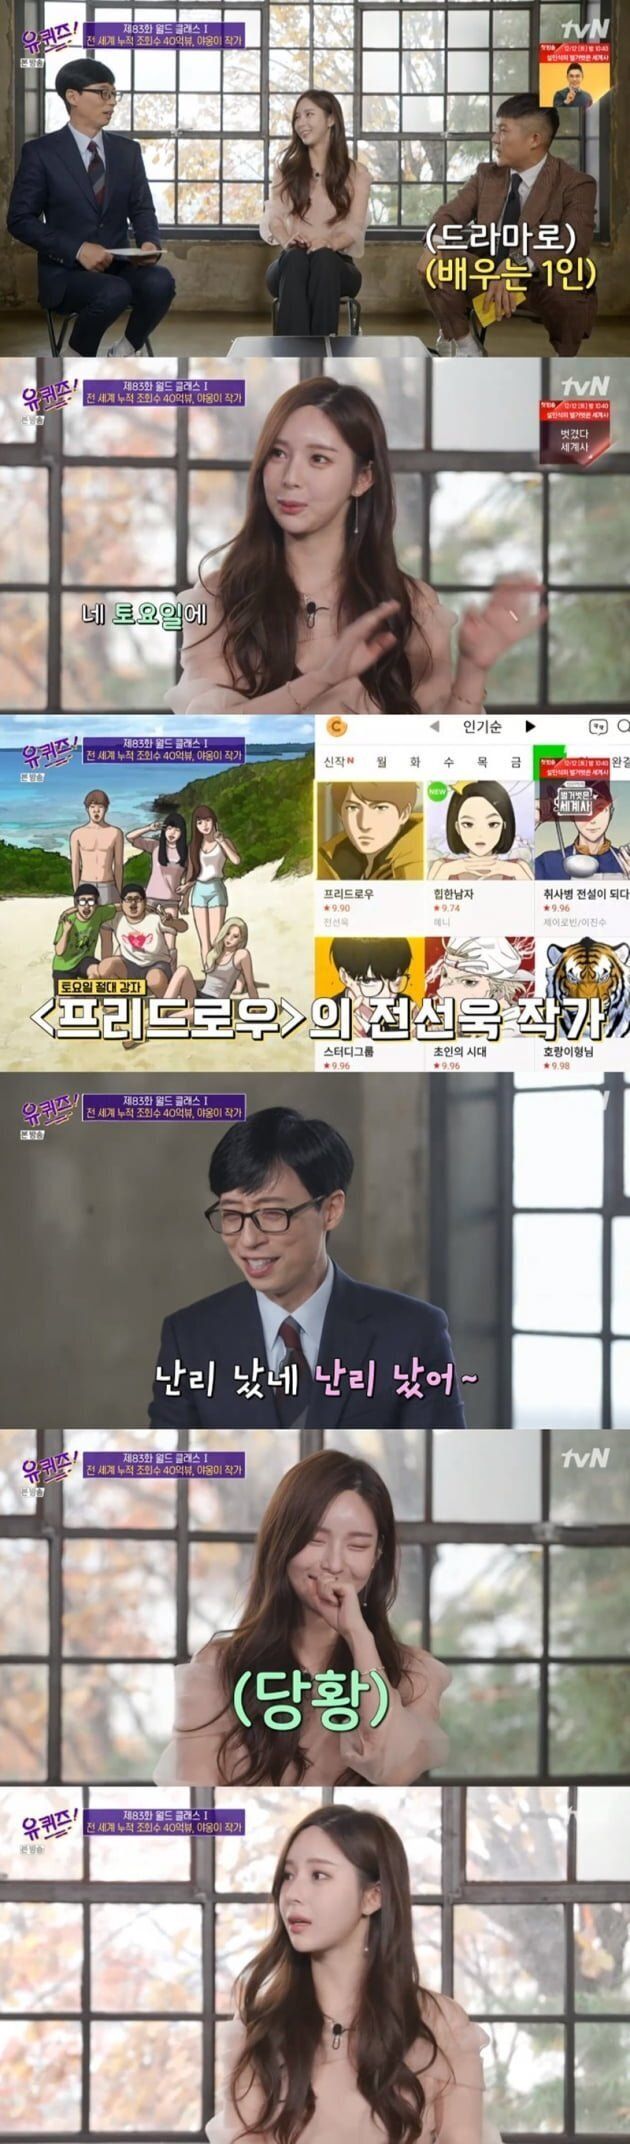 tvN '유 퀴즈 온 더 블럭' 방송화면 캡처